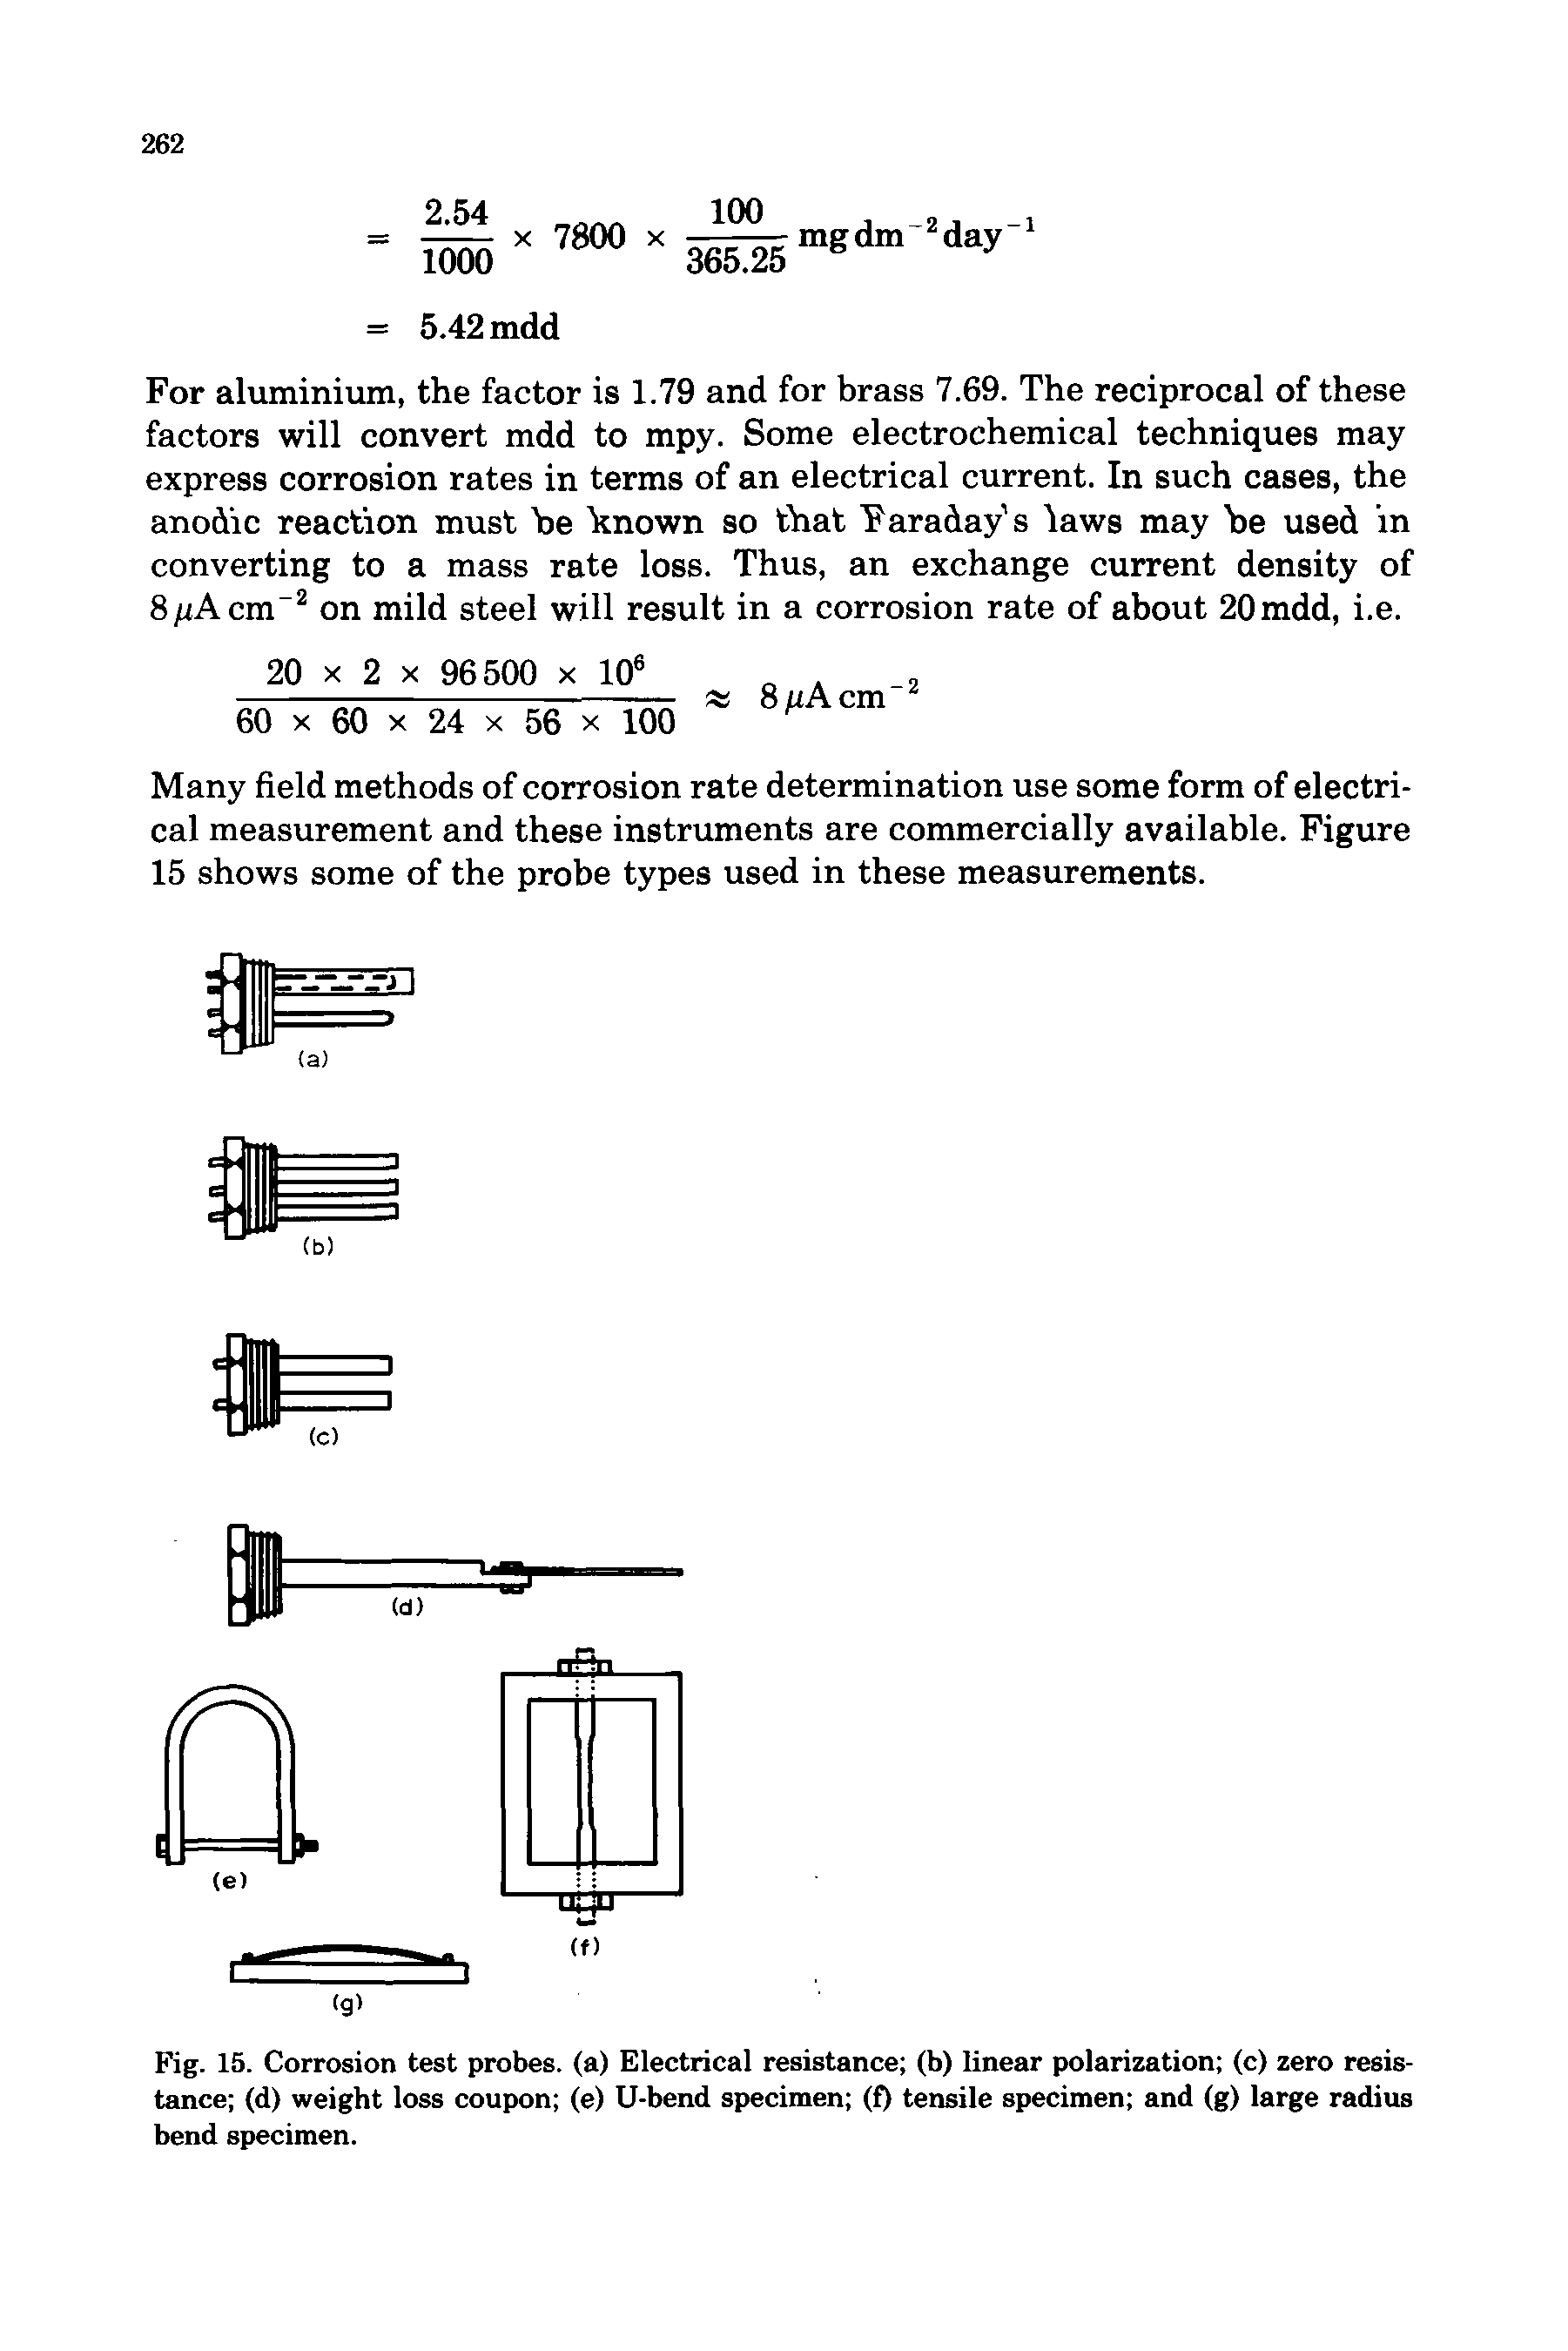 Fig. 15. Corrosion test probes, (a) Electrical resistance (b) linear polarization (c) zero resistance (d) weight loss coupon (e) U-bend specimen (f) tensile specimen and (g) large radius bend specimen.